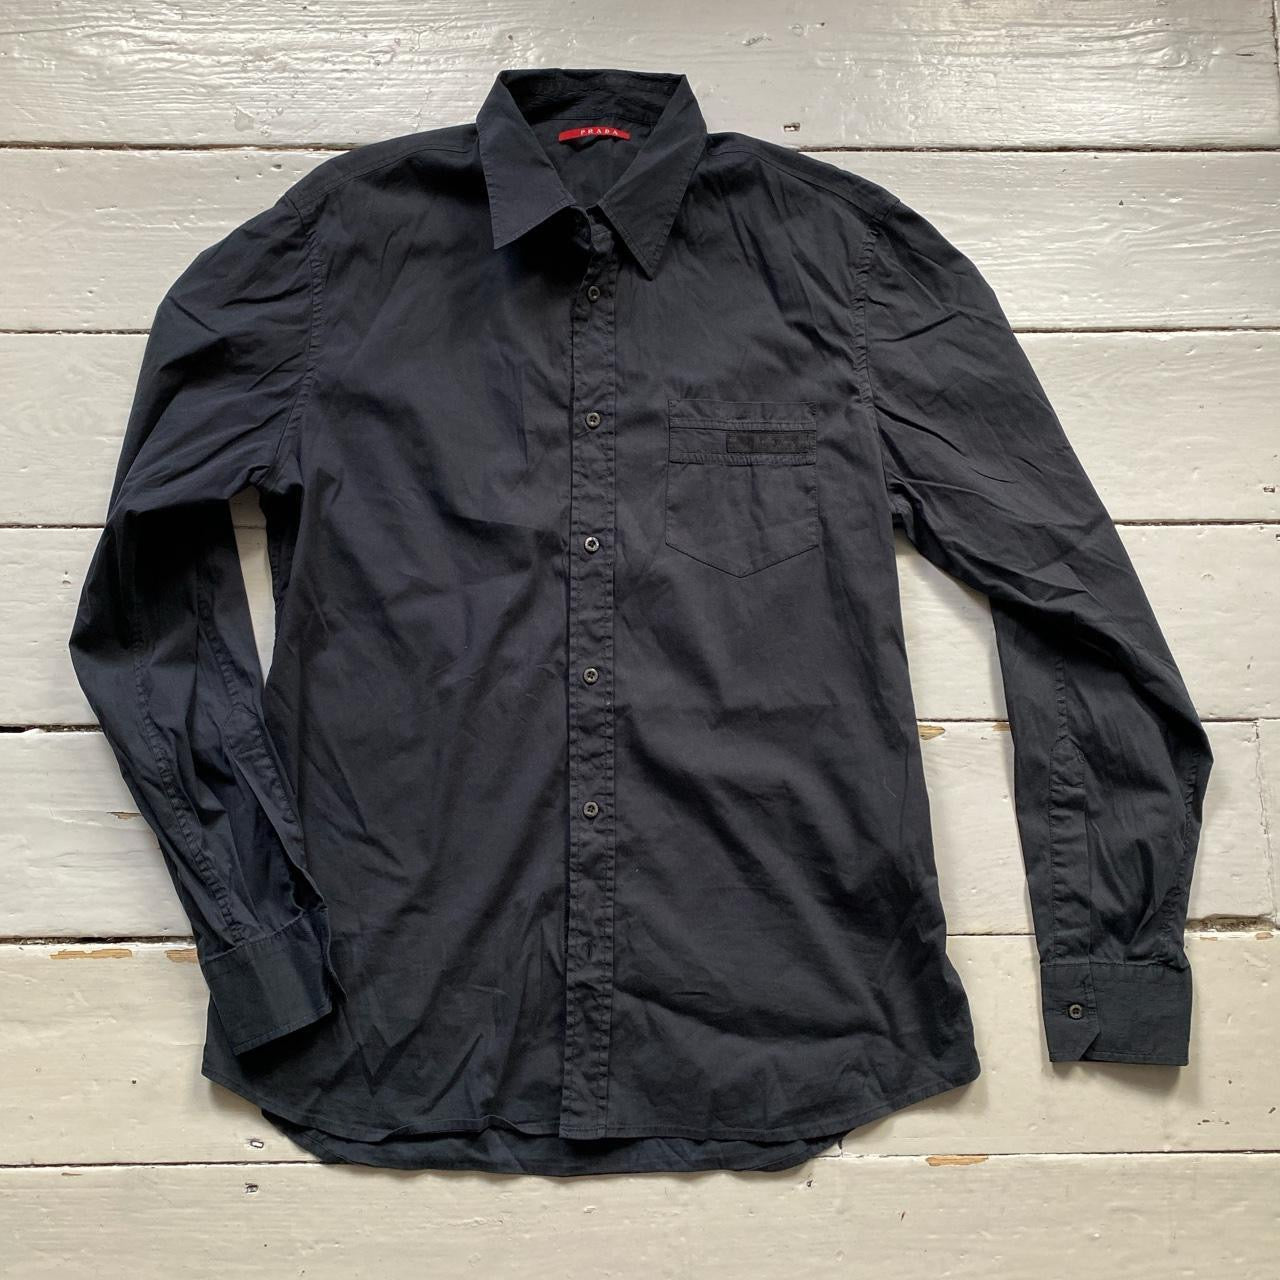 Prada Vintage Black Long Sleeve Shirt (Large)